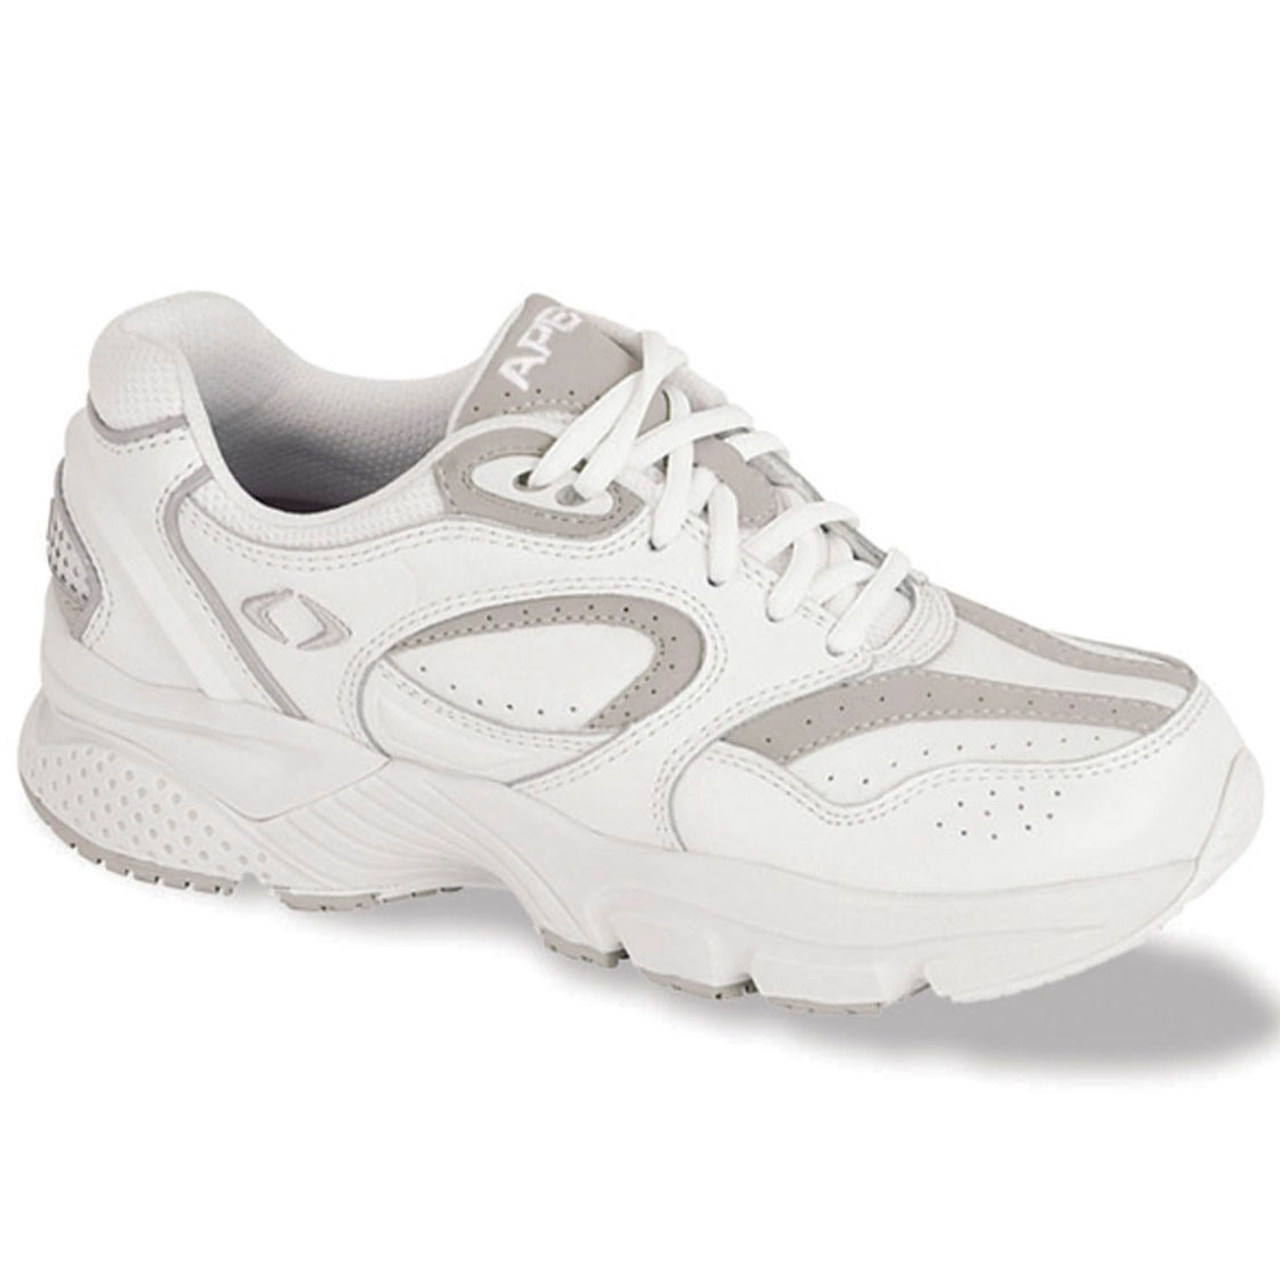 Aetrex X821 Lenex Walking Shoe - White/Beige (Women's) - Orthotic Shop